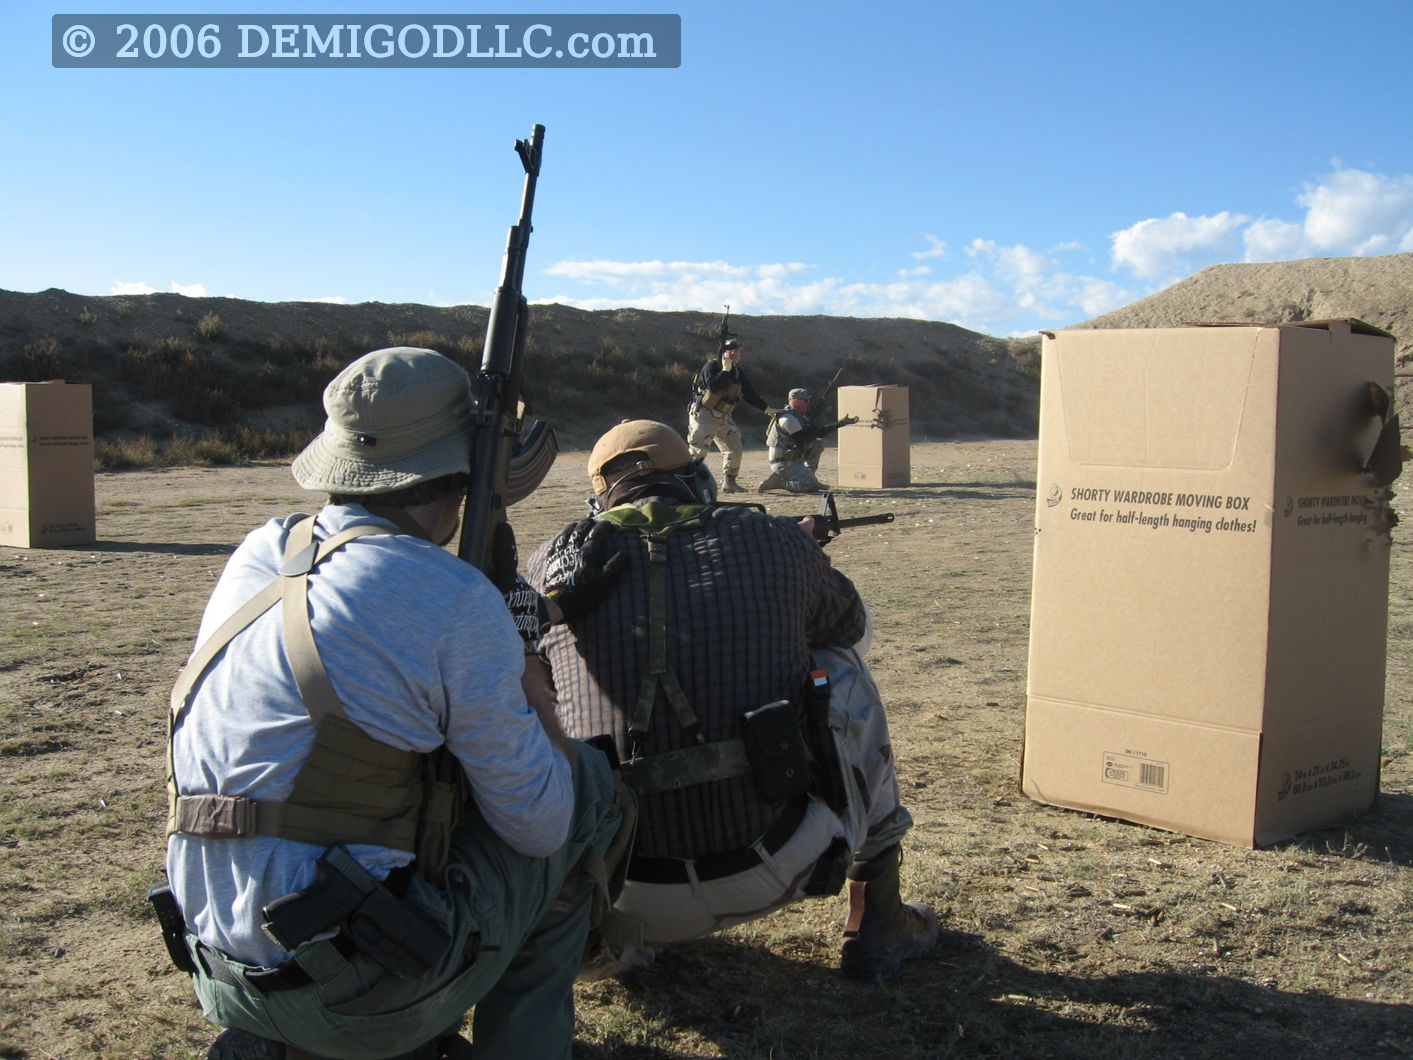 Tactical Response Fighting Rifle, Pueblo CO, Oct 2006

, photo 